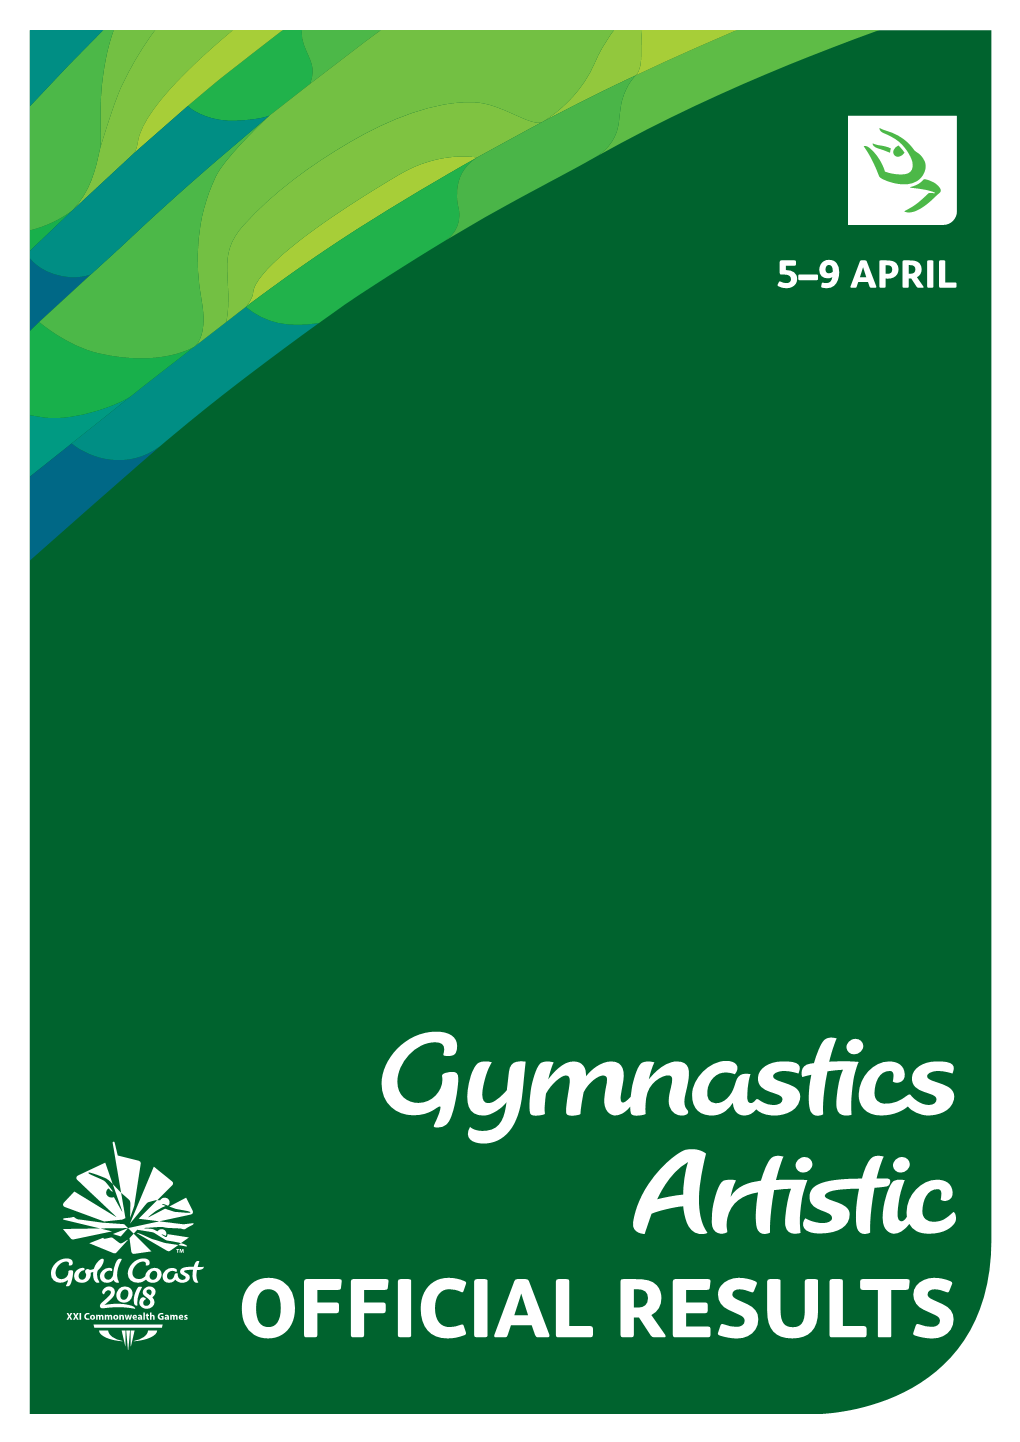 Gymnastics Artistic OFFICIAL RESULTS Coomera Indoor Sports Centre Artistic Gymnastics